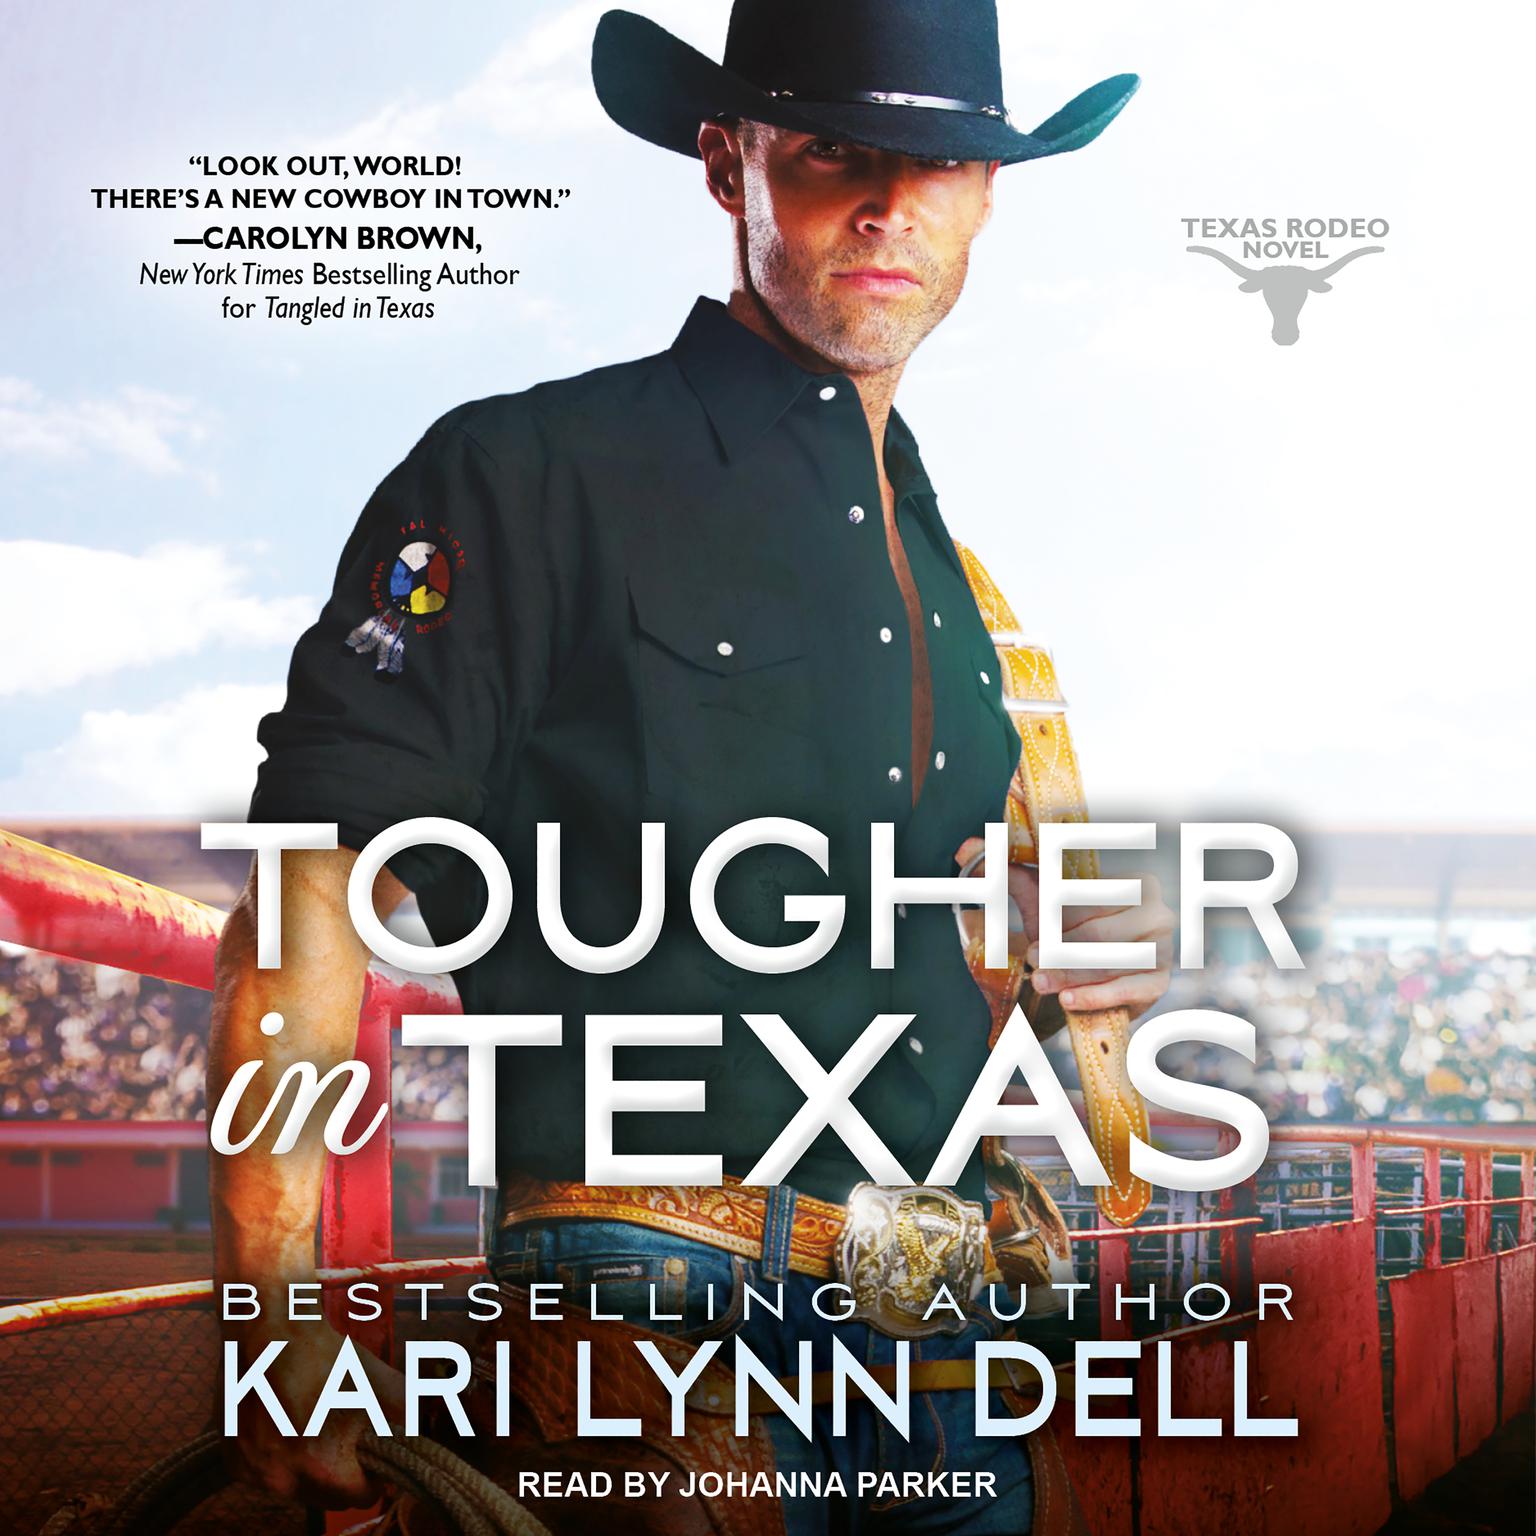 Tougher in Texas Audiobook, by Kari Lynn Dell